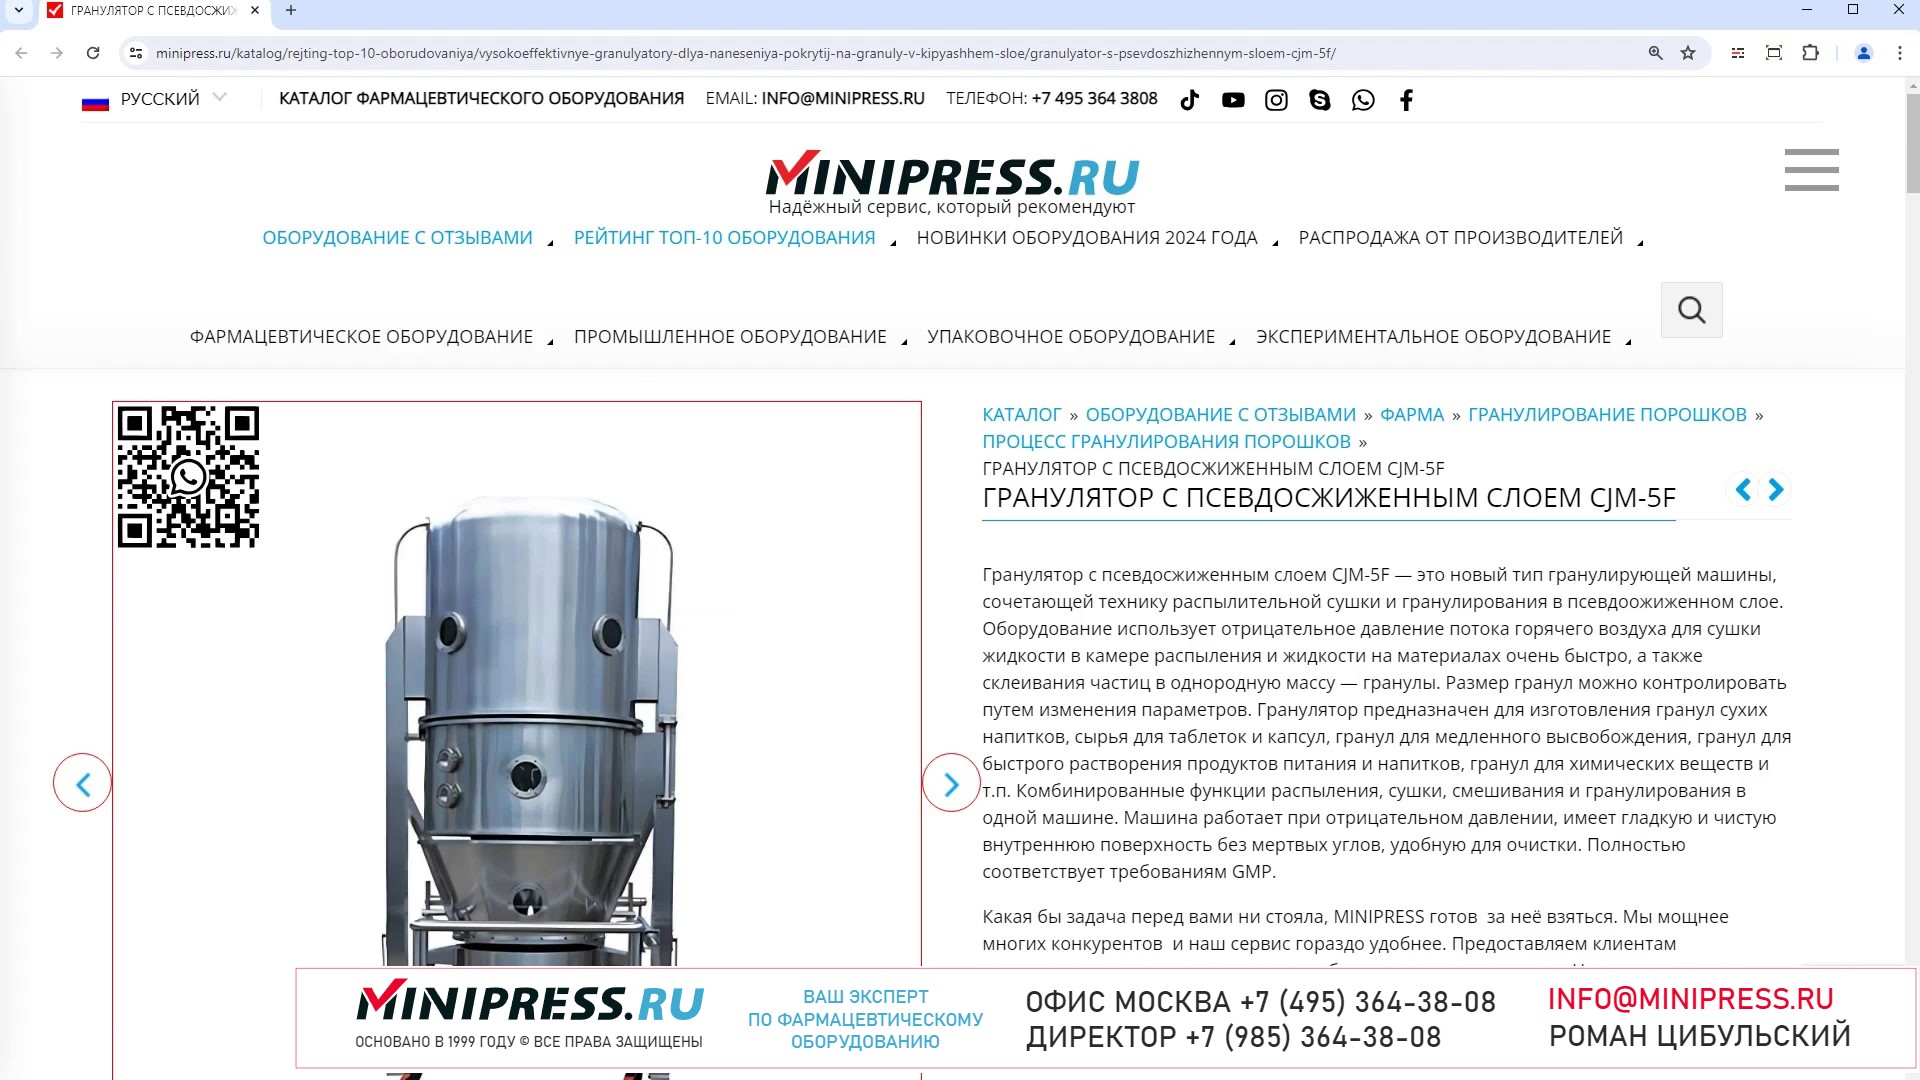 Minipress.ru Гранулятор с псевдосжиженным слоем CJM-5F